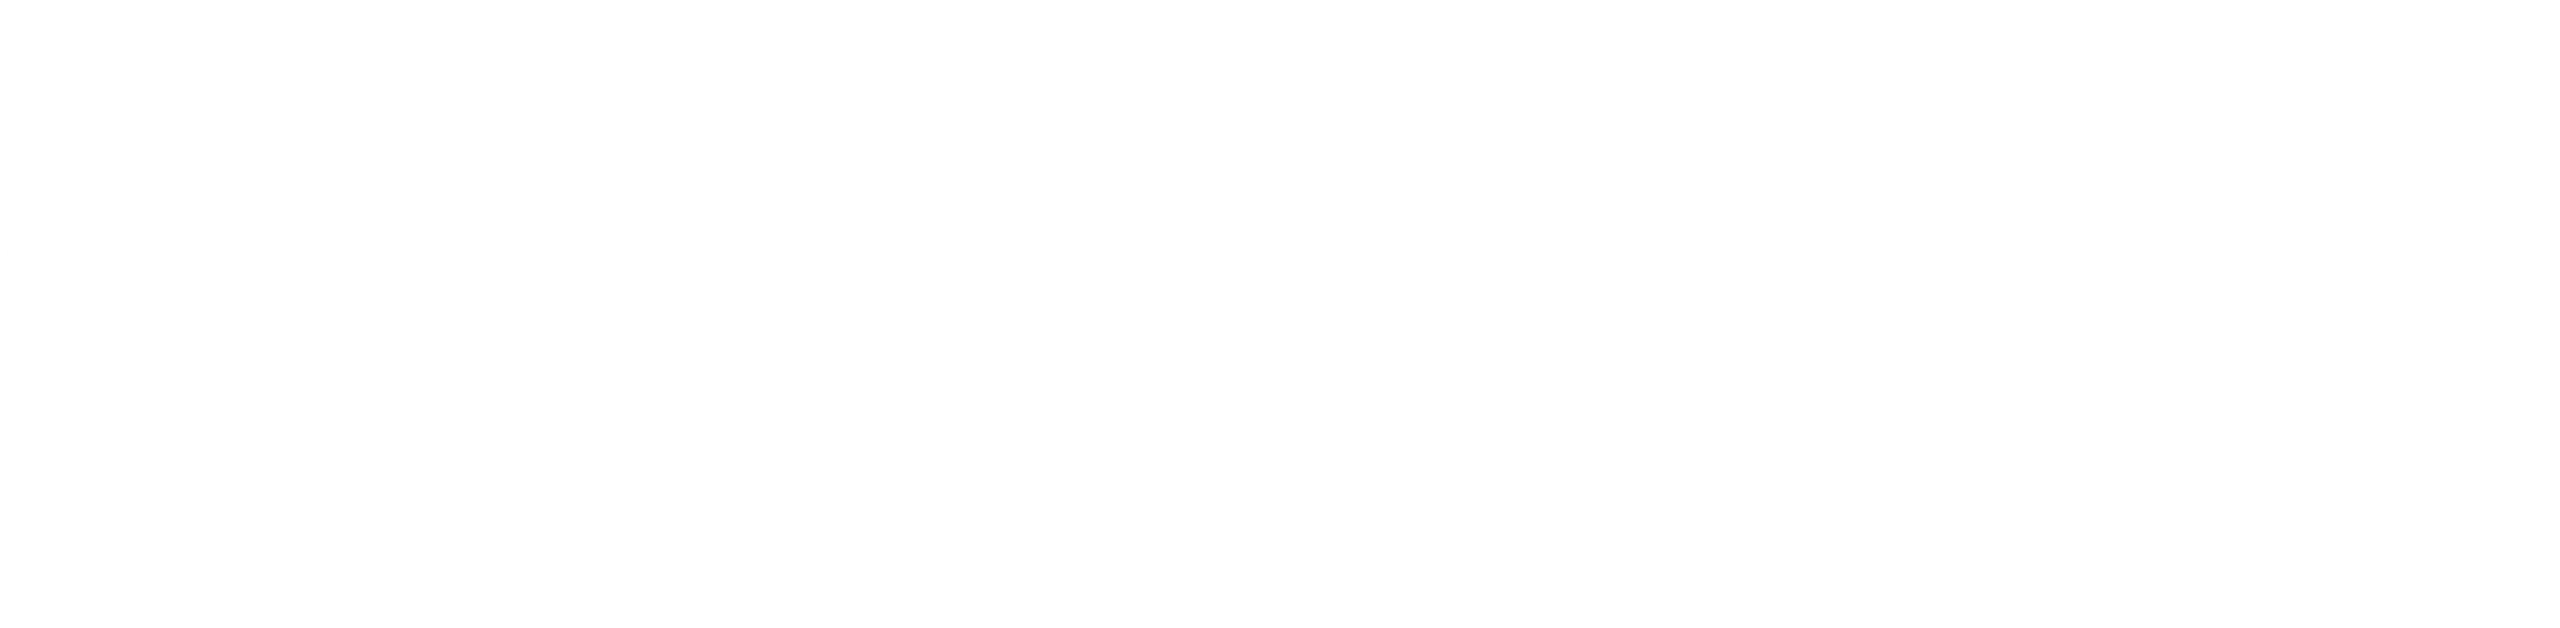 Petrosoft logo white